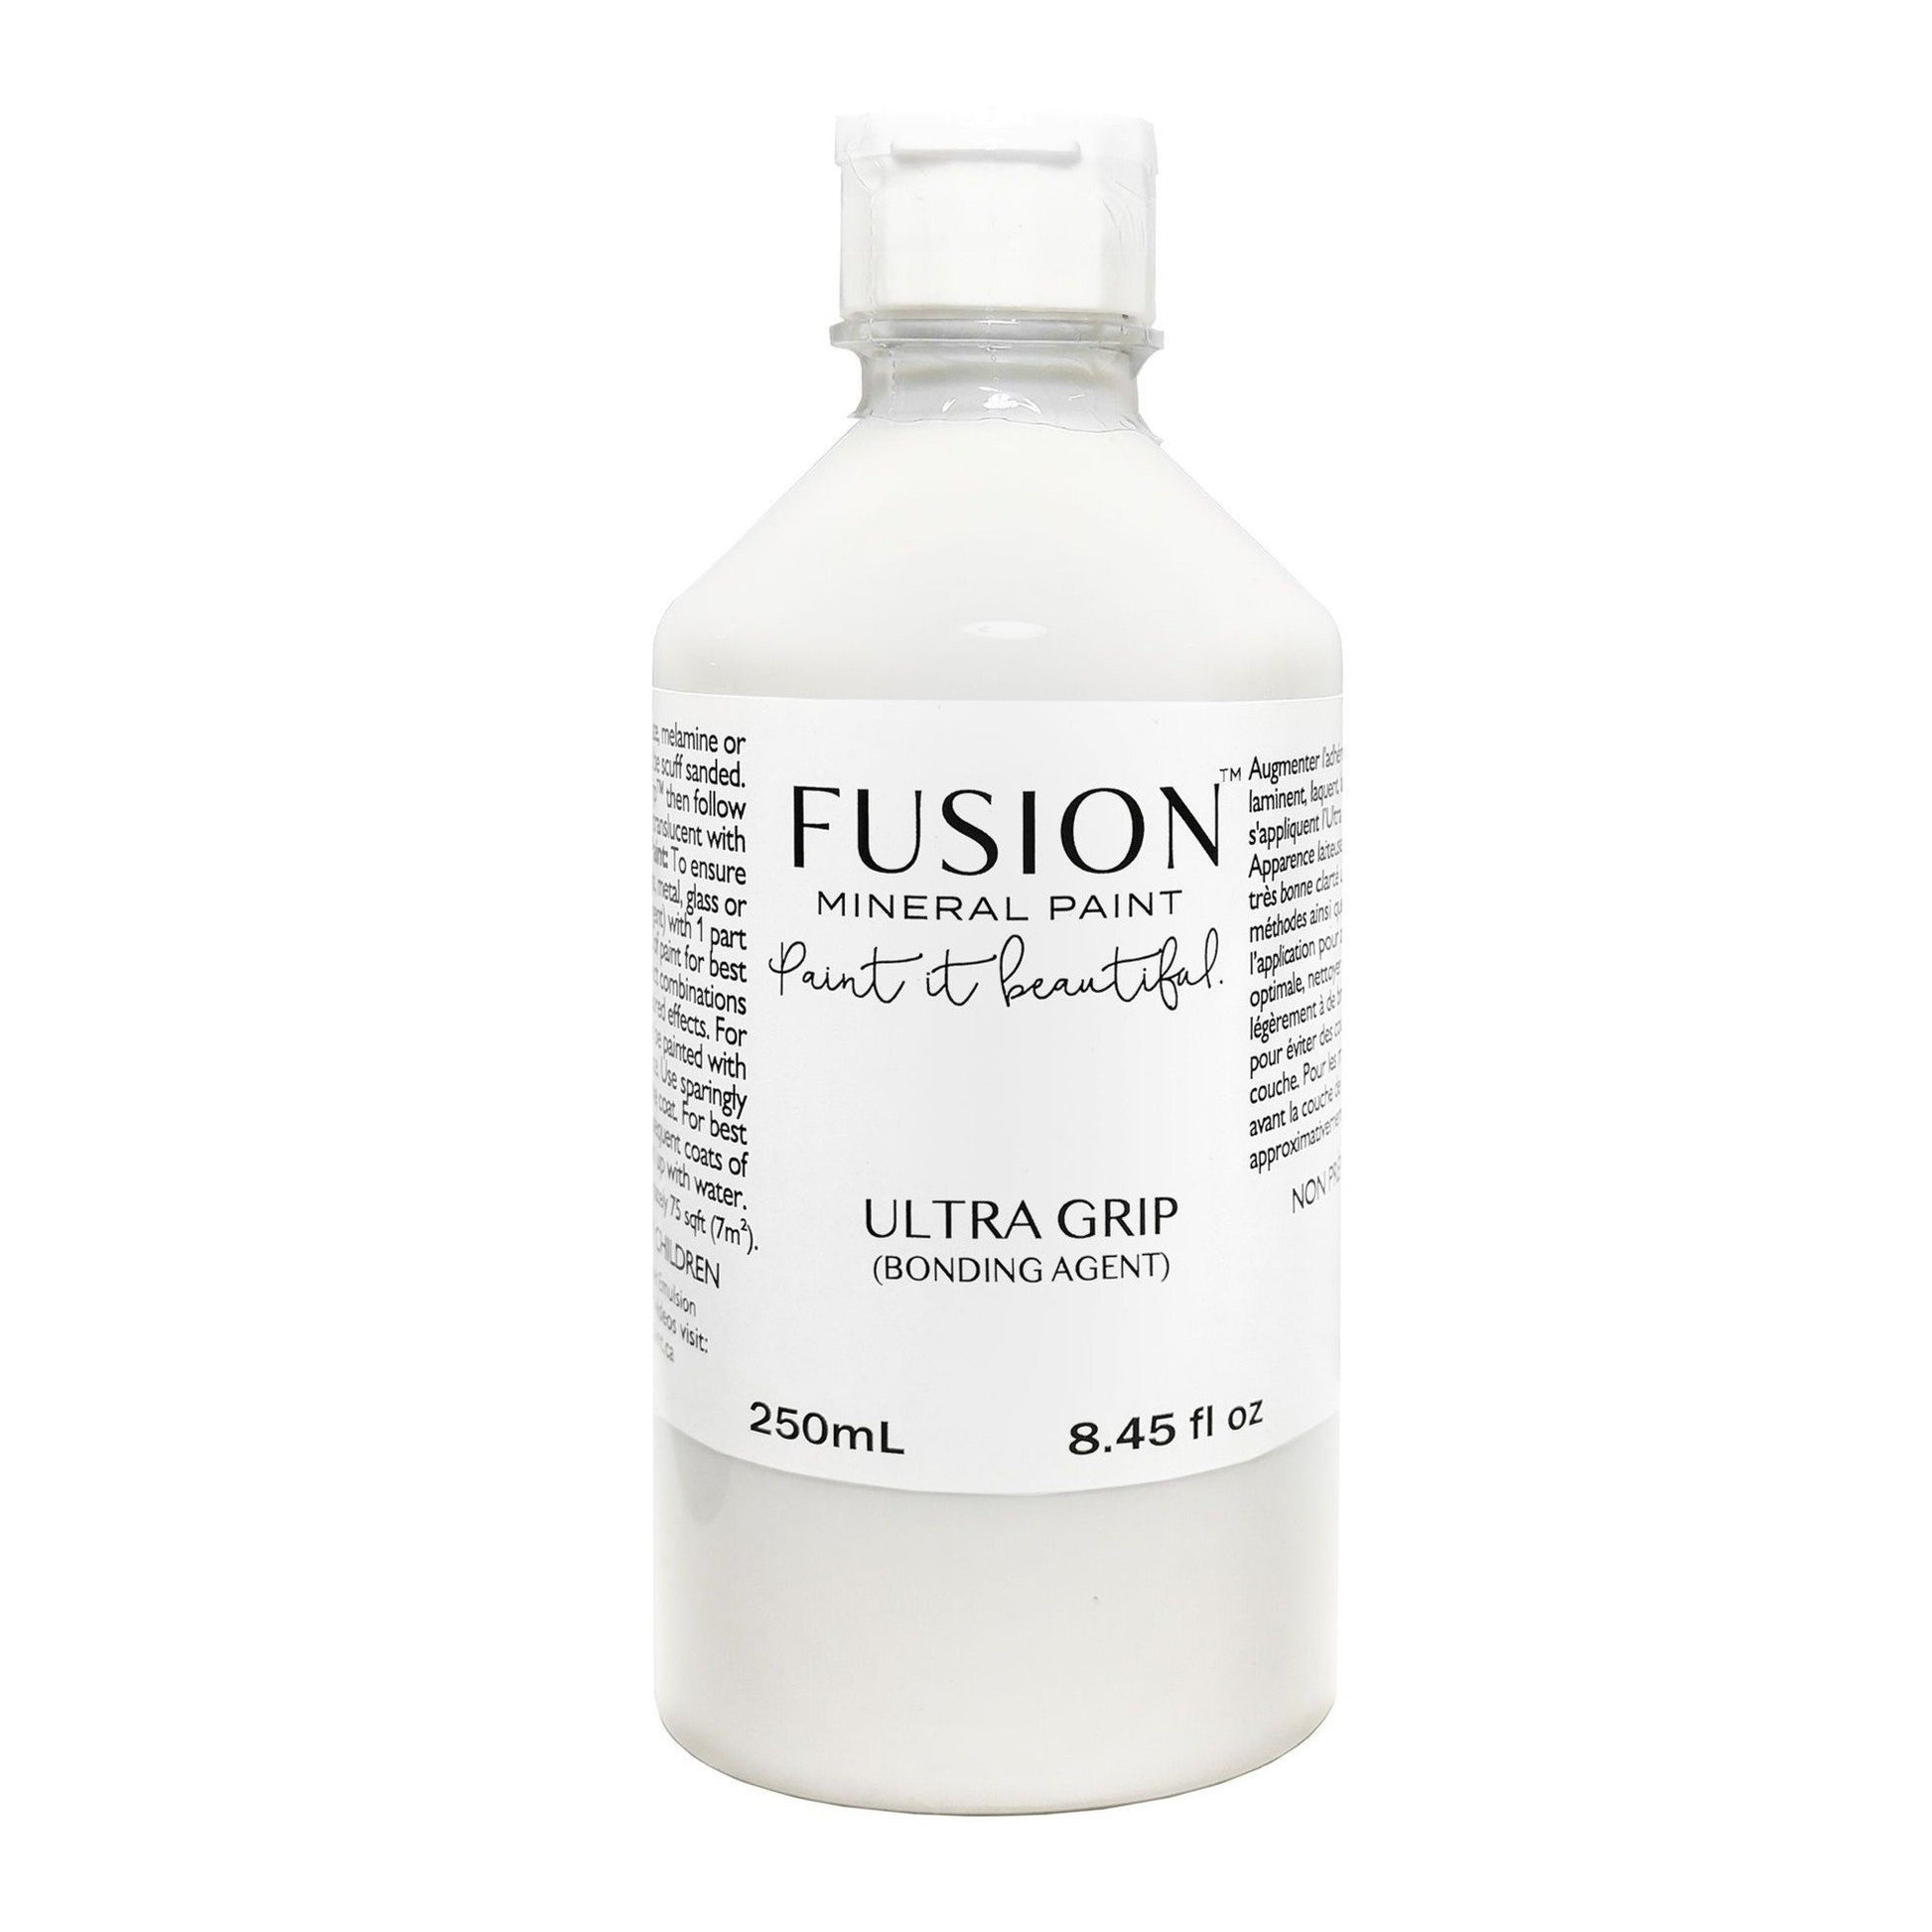 ULTRA GRIP Bonding Agent- 250ml/500ml - Fusion Mineral Paint